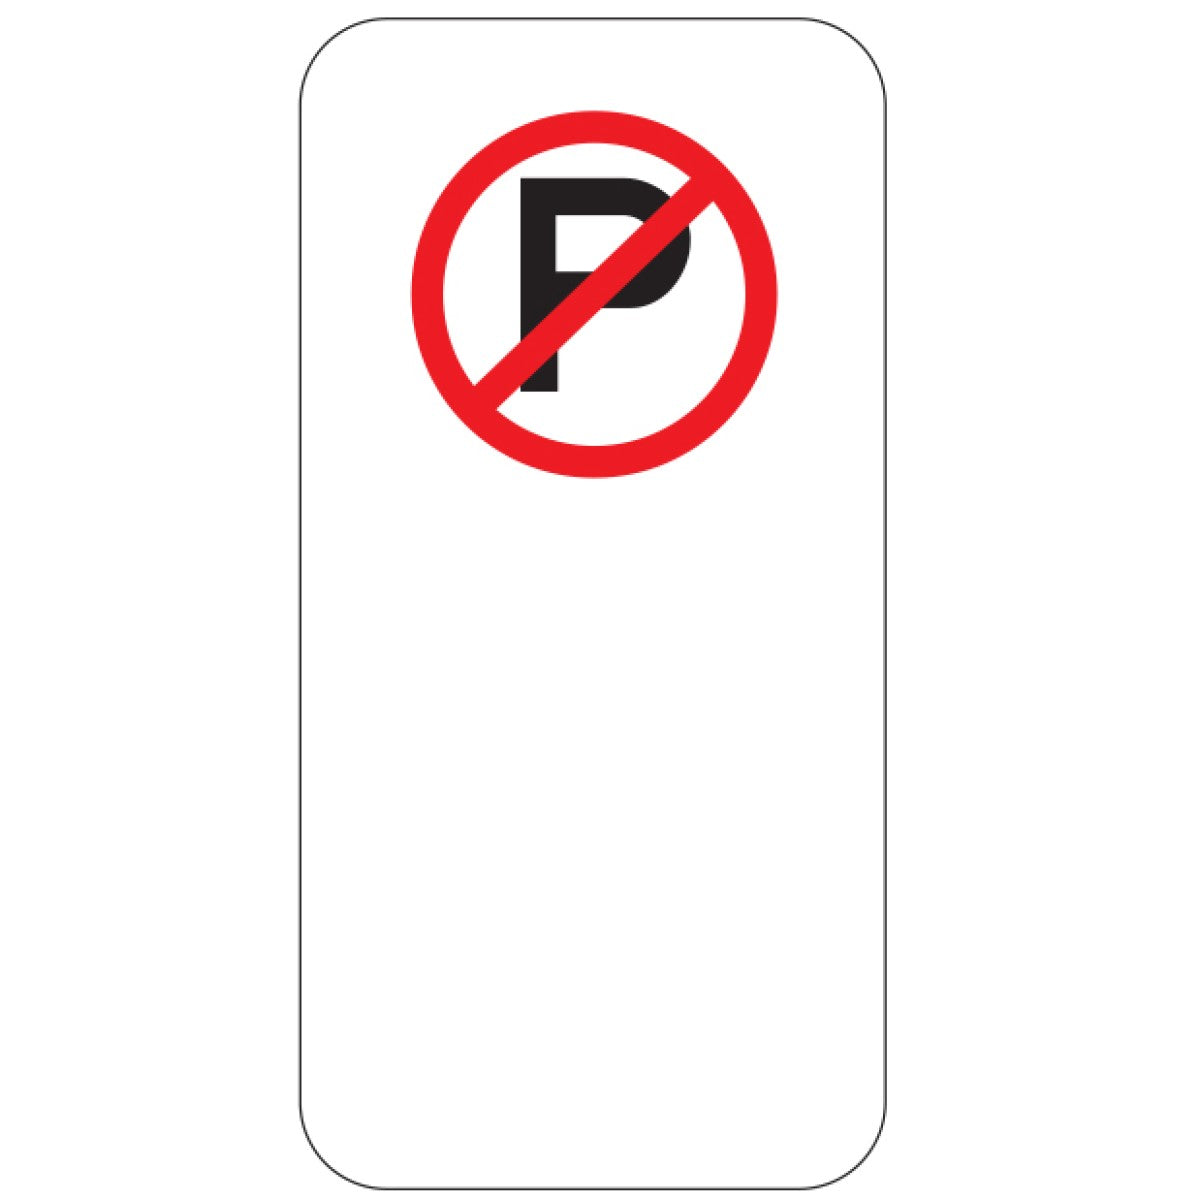 No Parking Sign